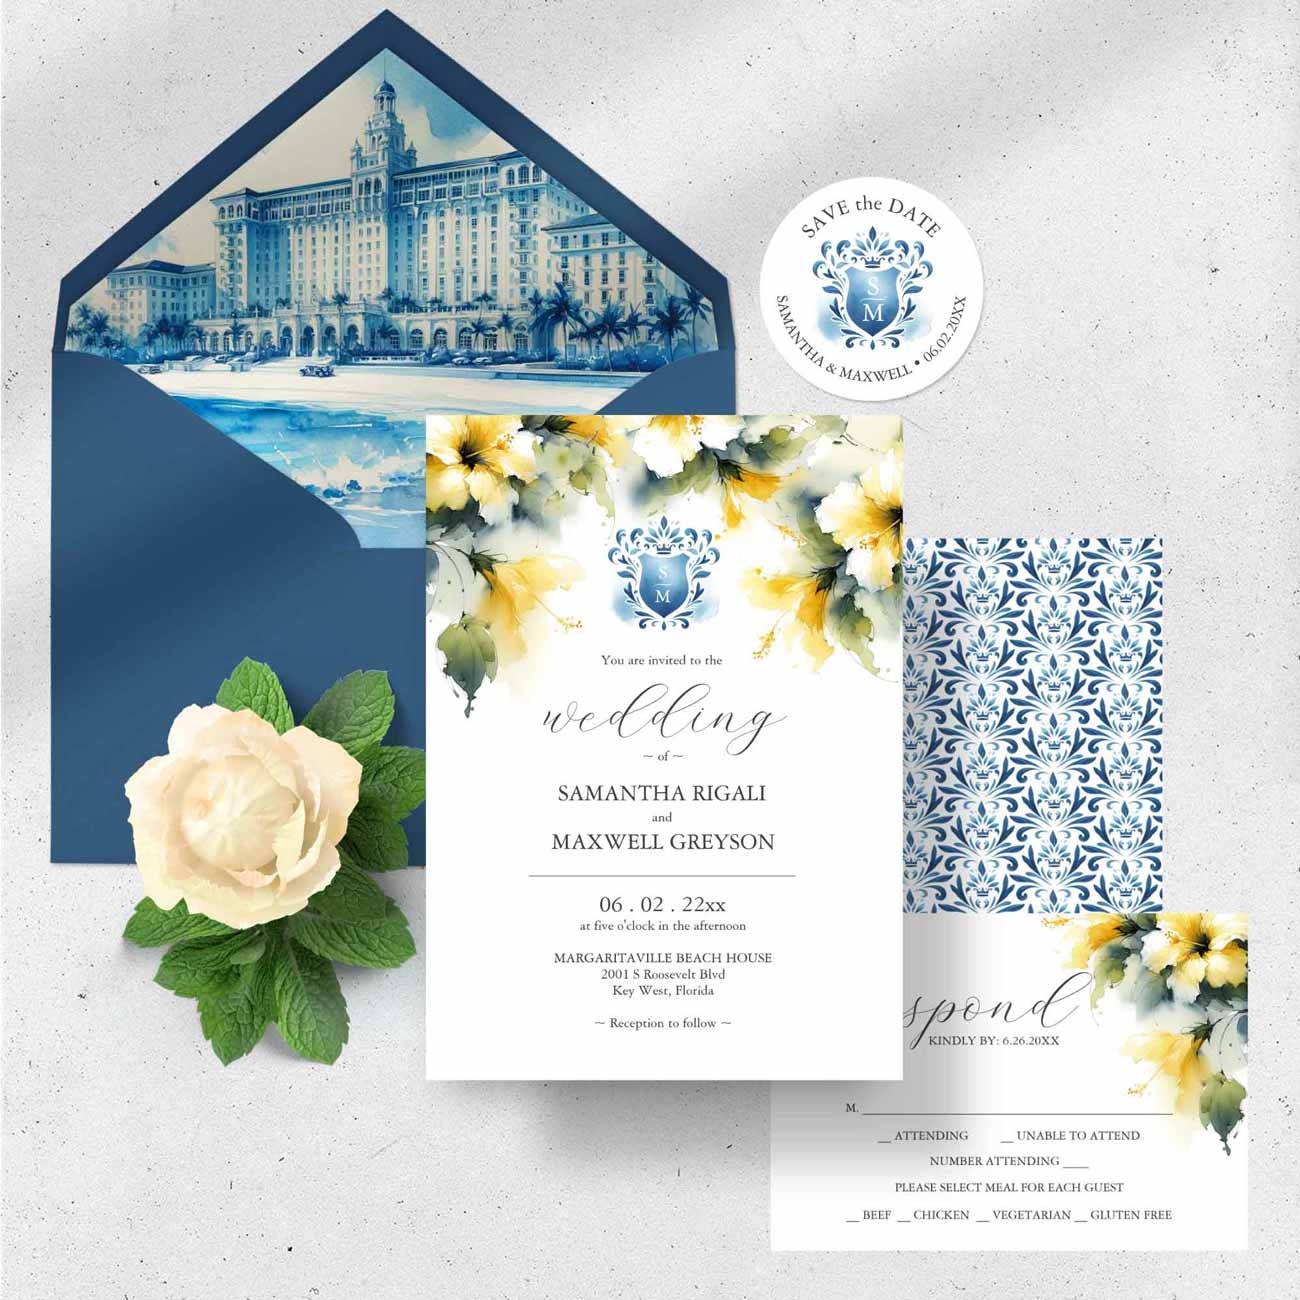 Destination wedding invitations with venue envelope liner yellow hibiscus flowers blue monogram. Click to shop more. 